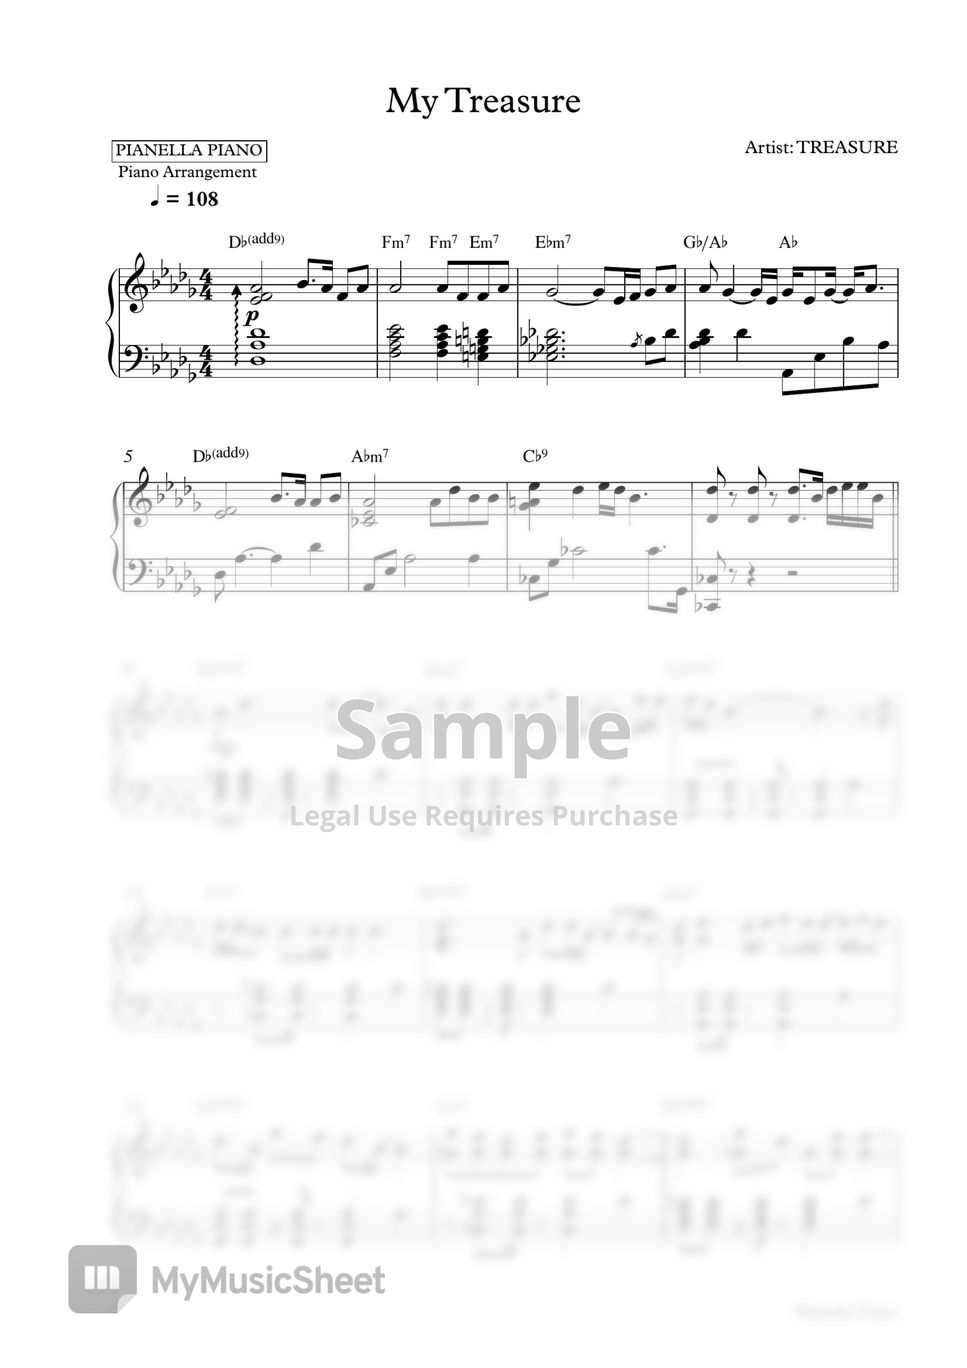 TREASURE - MY TREASURE (Piano Sheet) by Pianella Piano